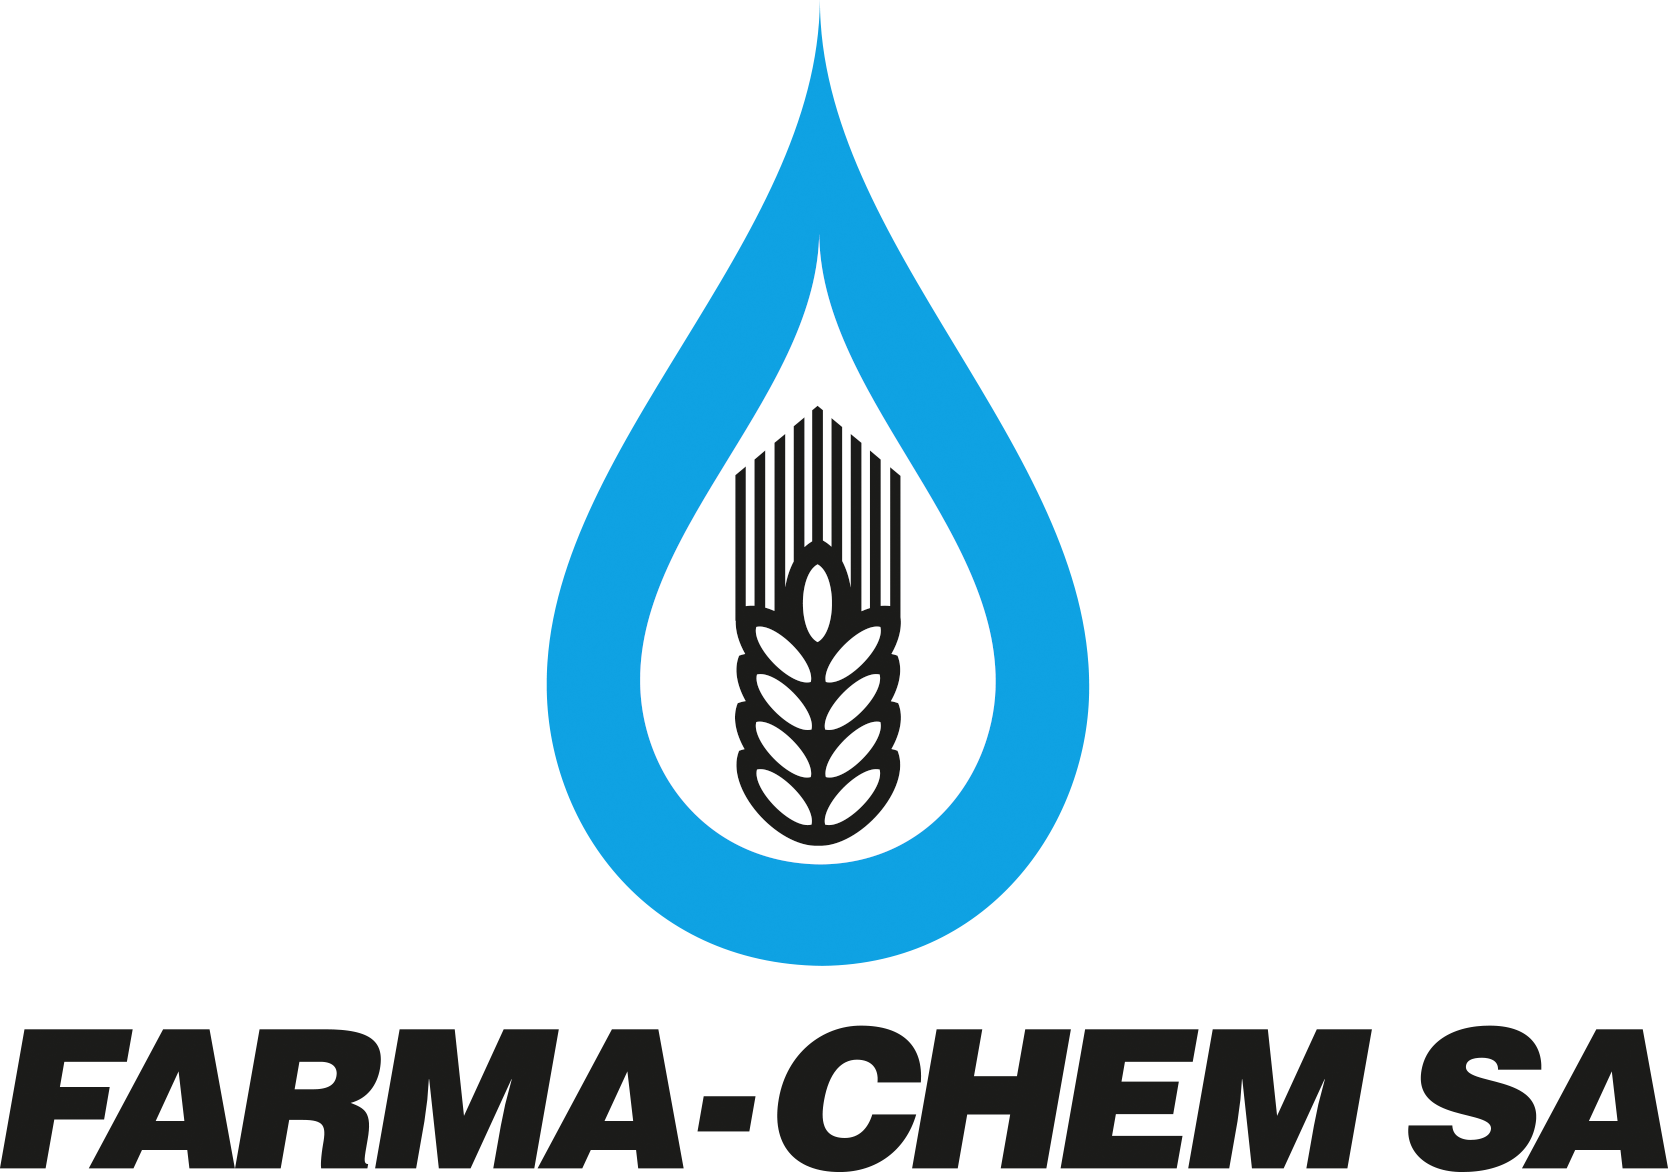 Farmachem RG Logotype